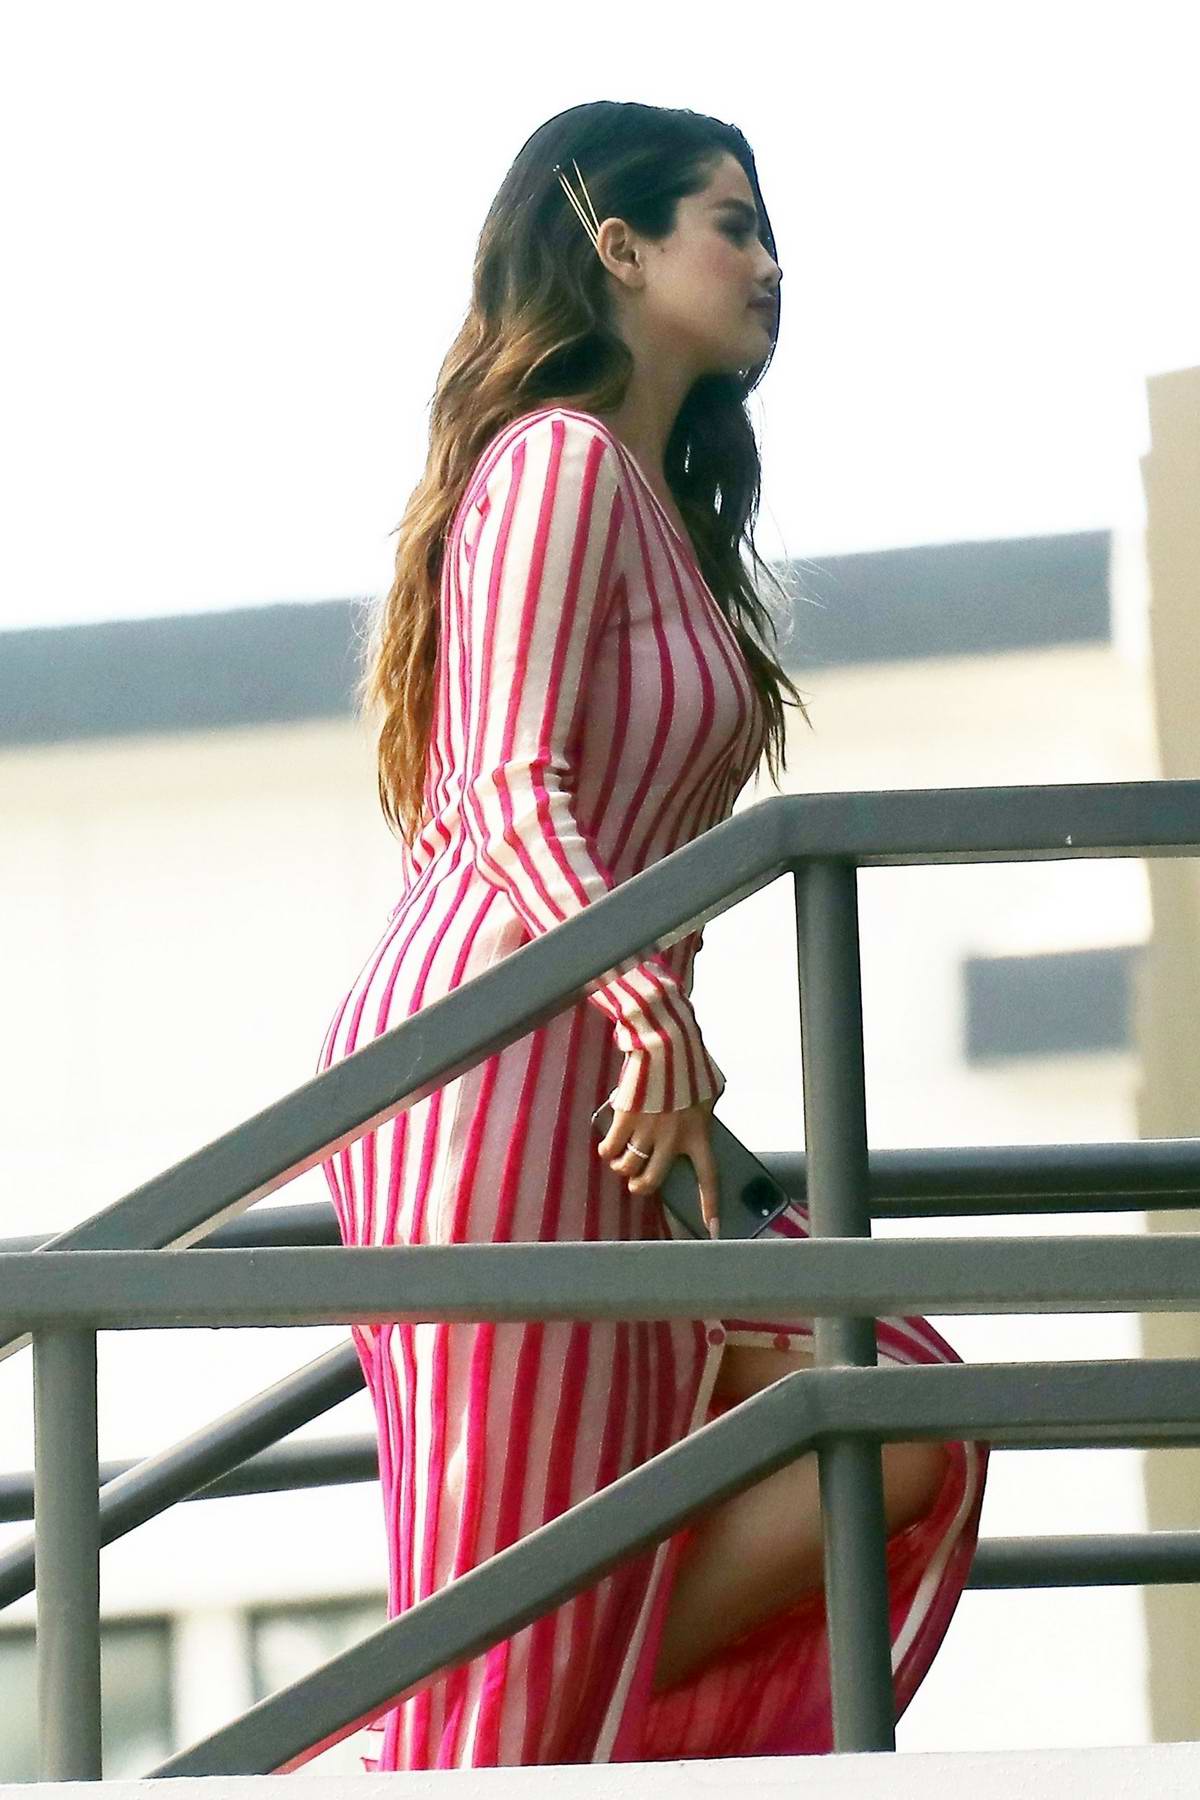 Selena Gomez Looks Poised in Polka Dots During Paris Fashion Week